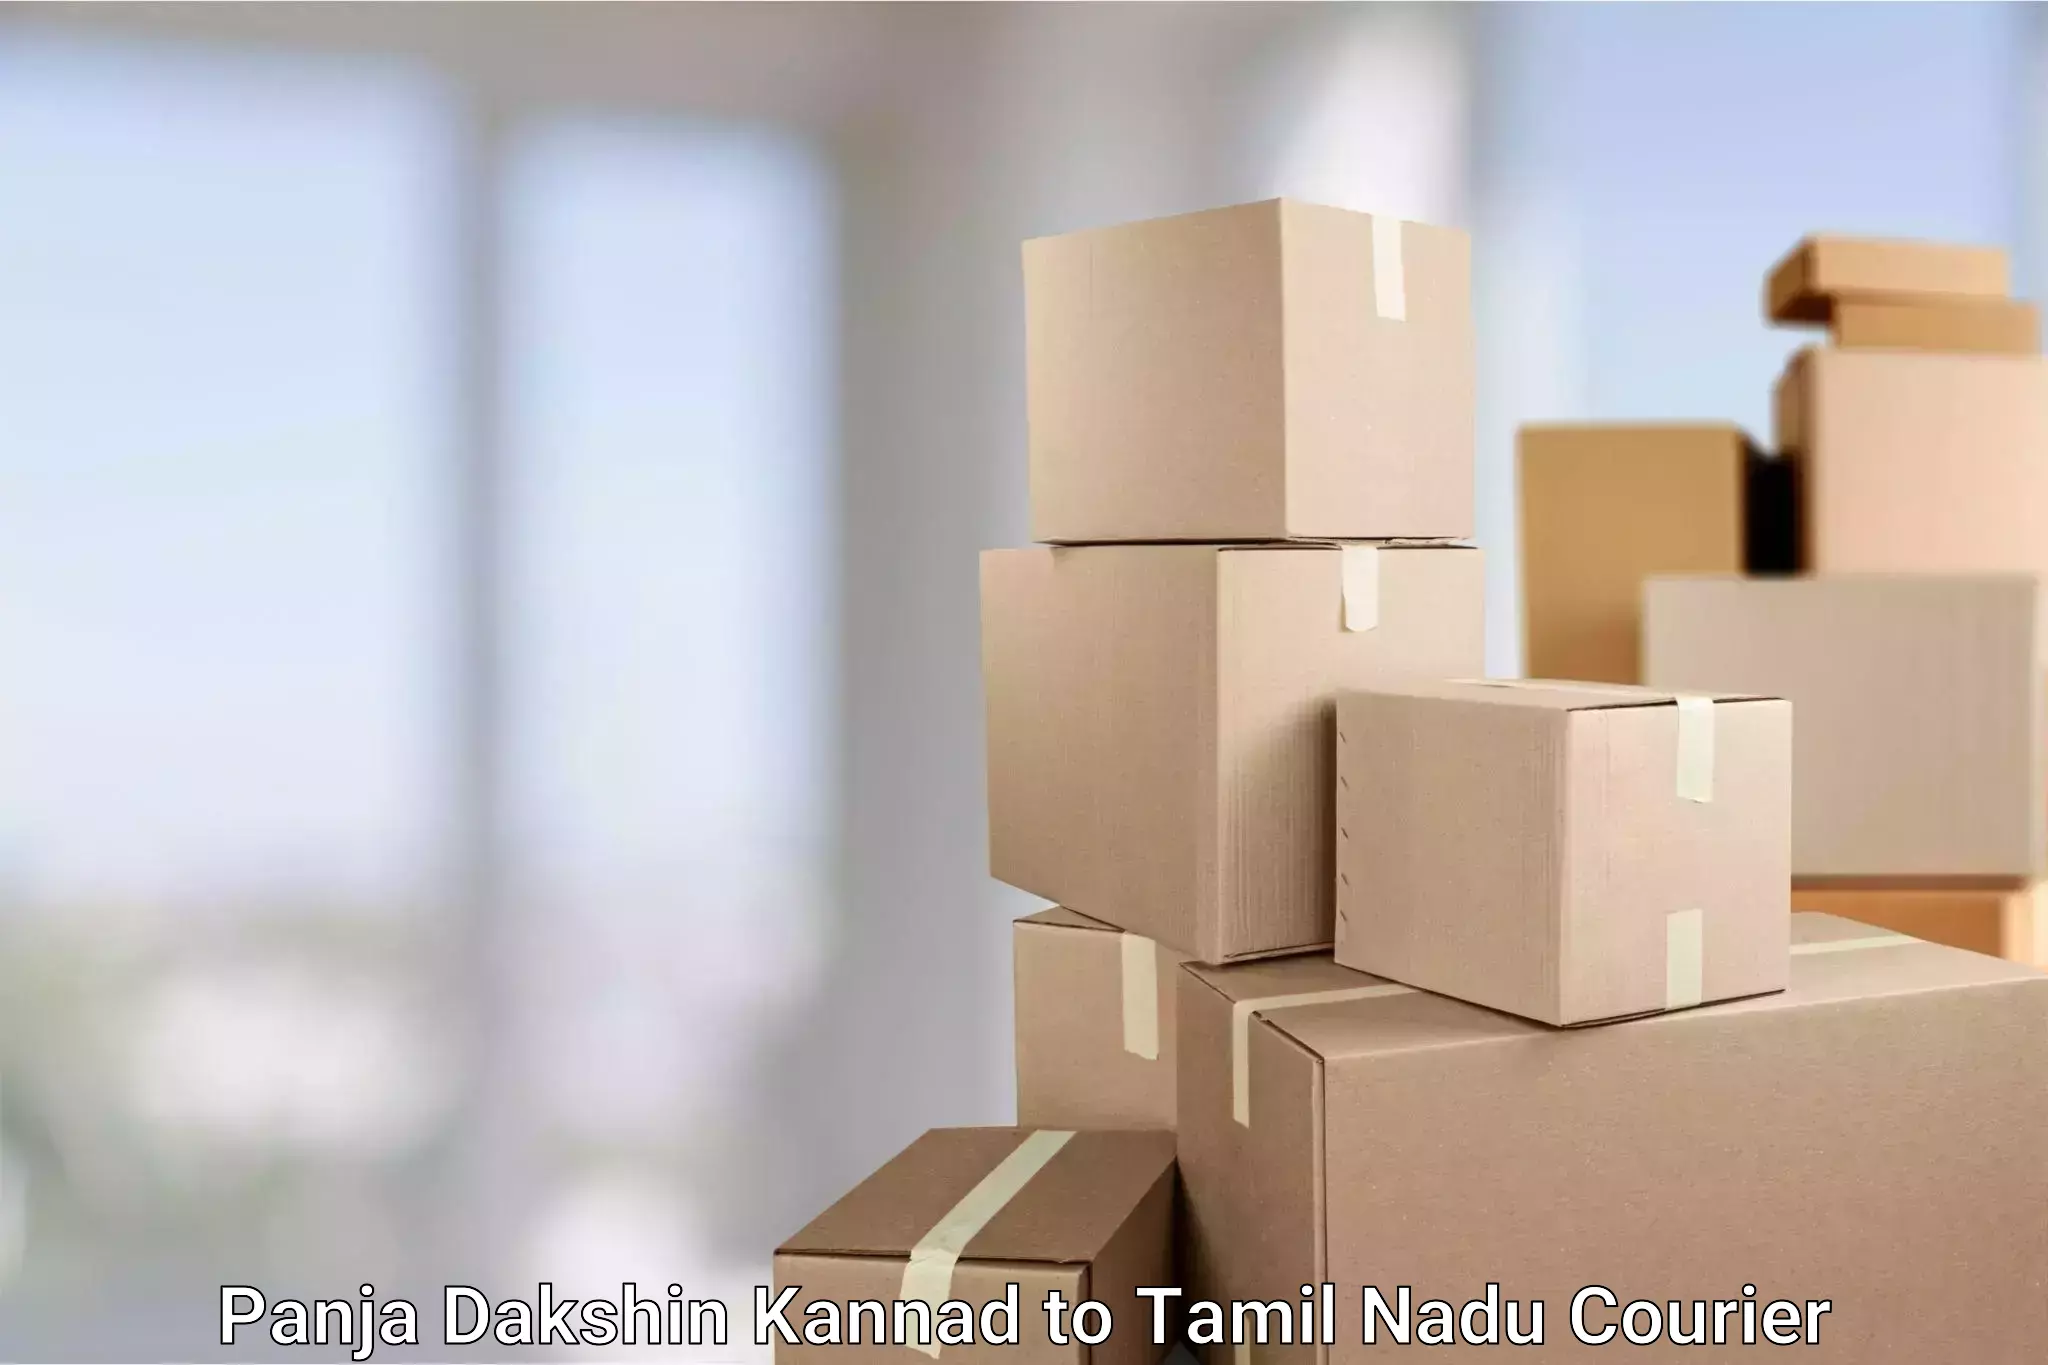 Reliable delivery network Panja Dakshin Kannad to Palladam